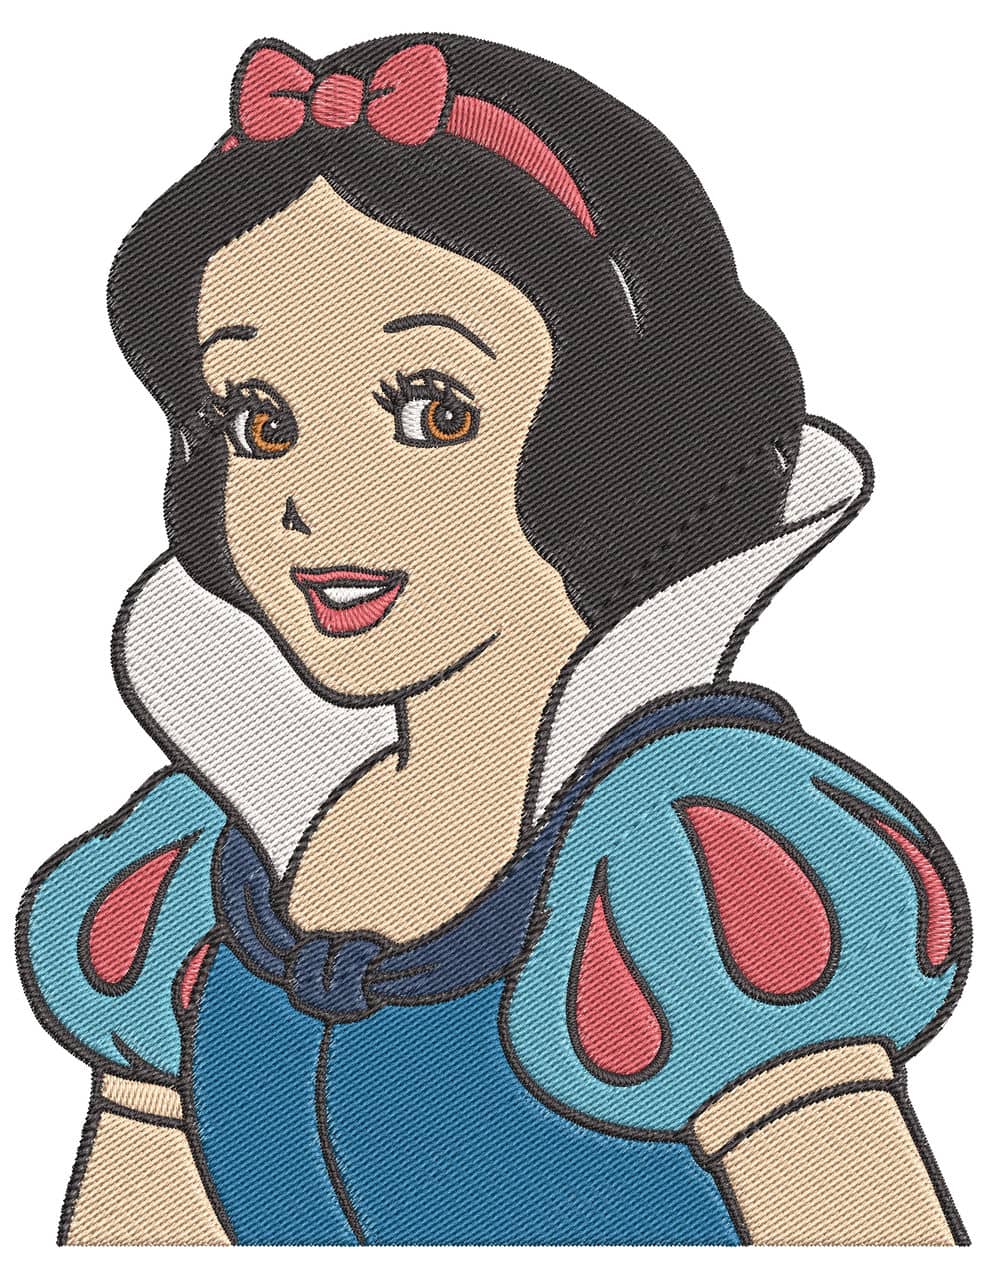 Snow White Princess Disney Seven Dwarfs Embroidery Design 032 Digital Embroidery Designs 